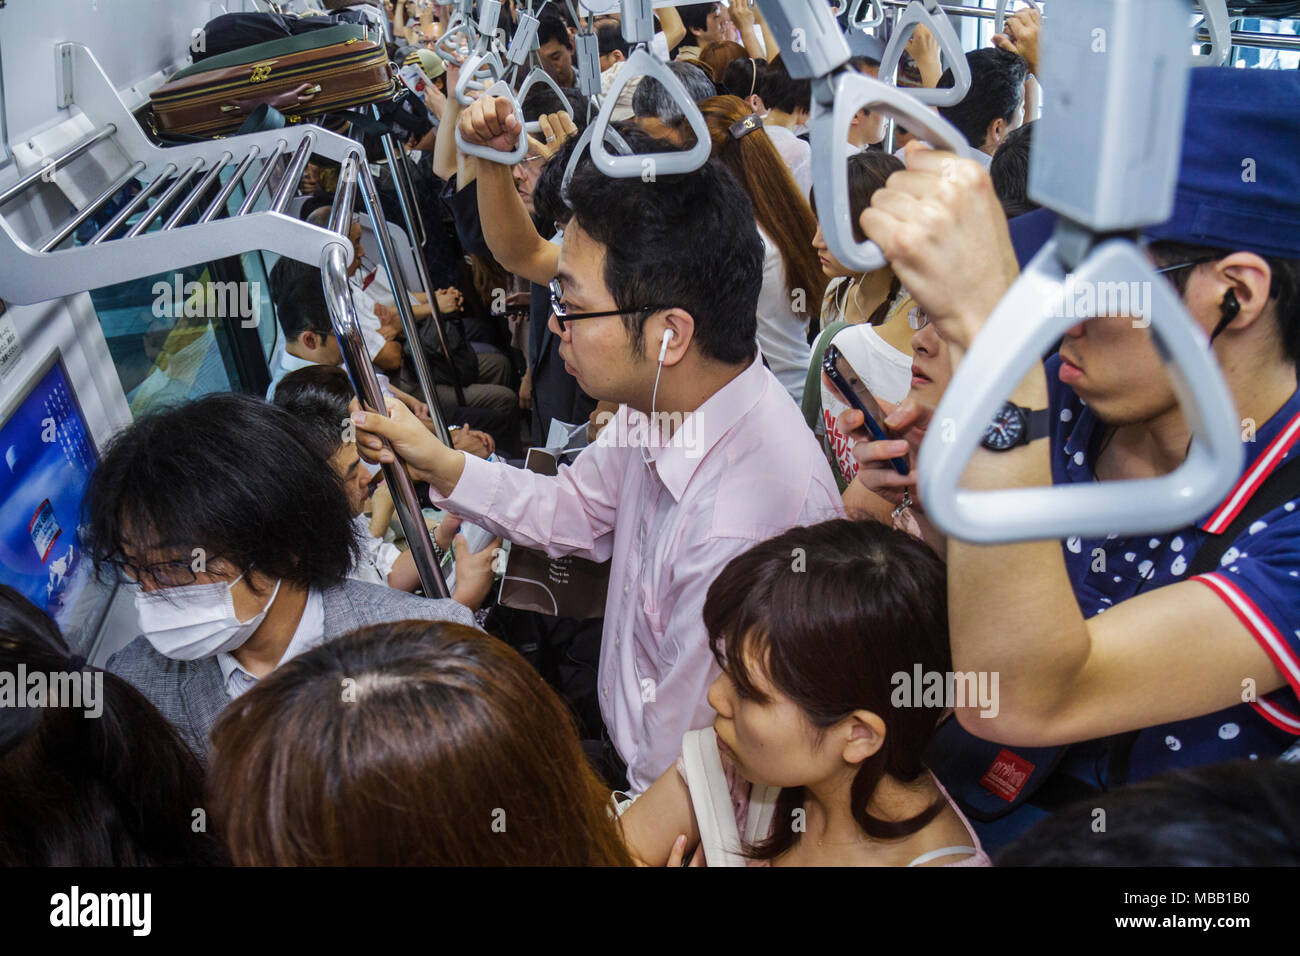 Tokyo Japan,Ikebukuro,JR Ikebukuro Station,Yamanote Line,Asian man men male adult adults,woman female women,crowded,standing,commuters,train car,strap Stock Photo